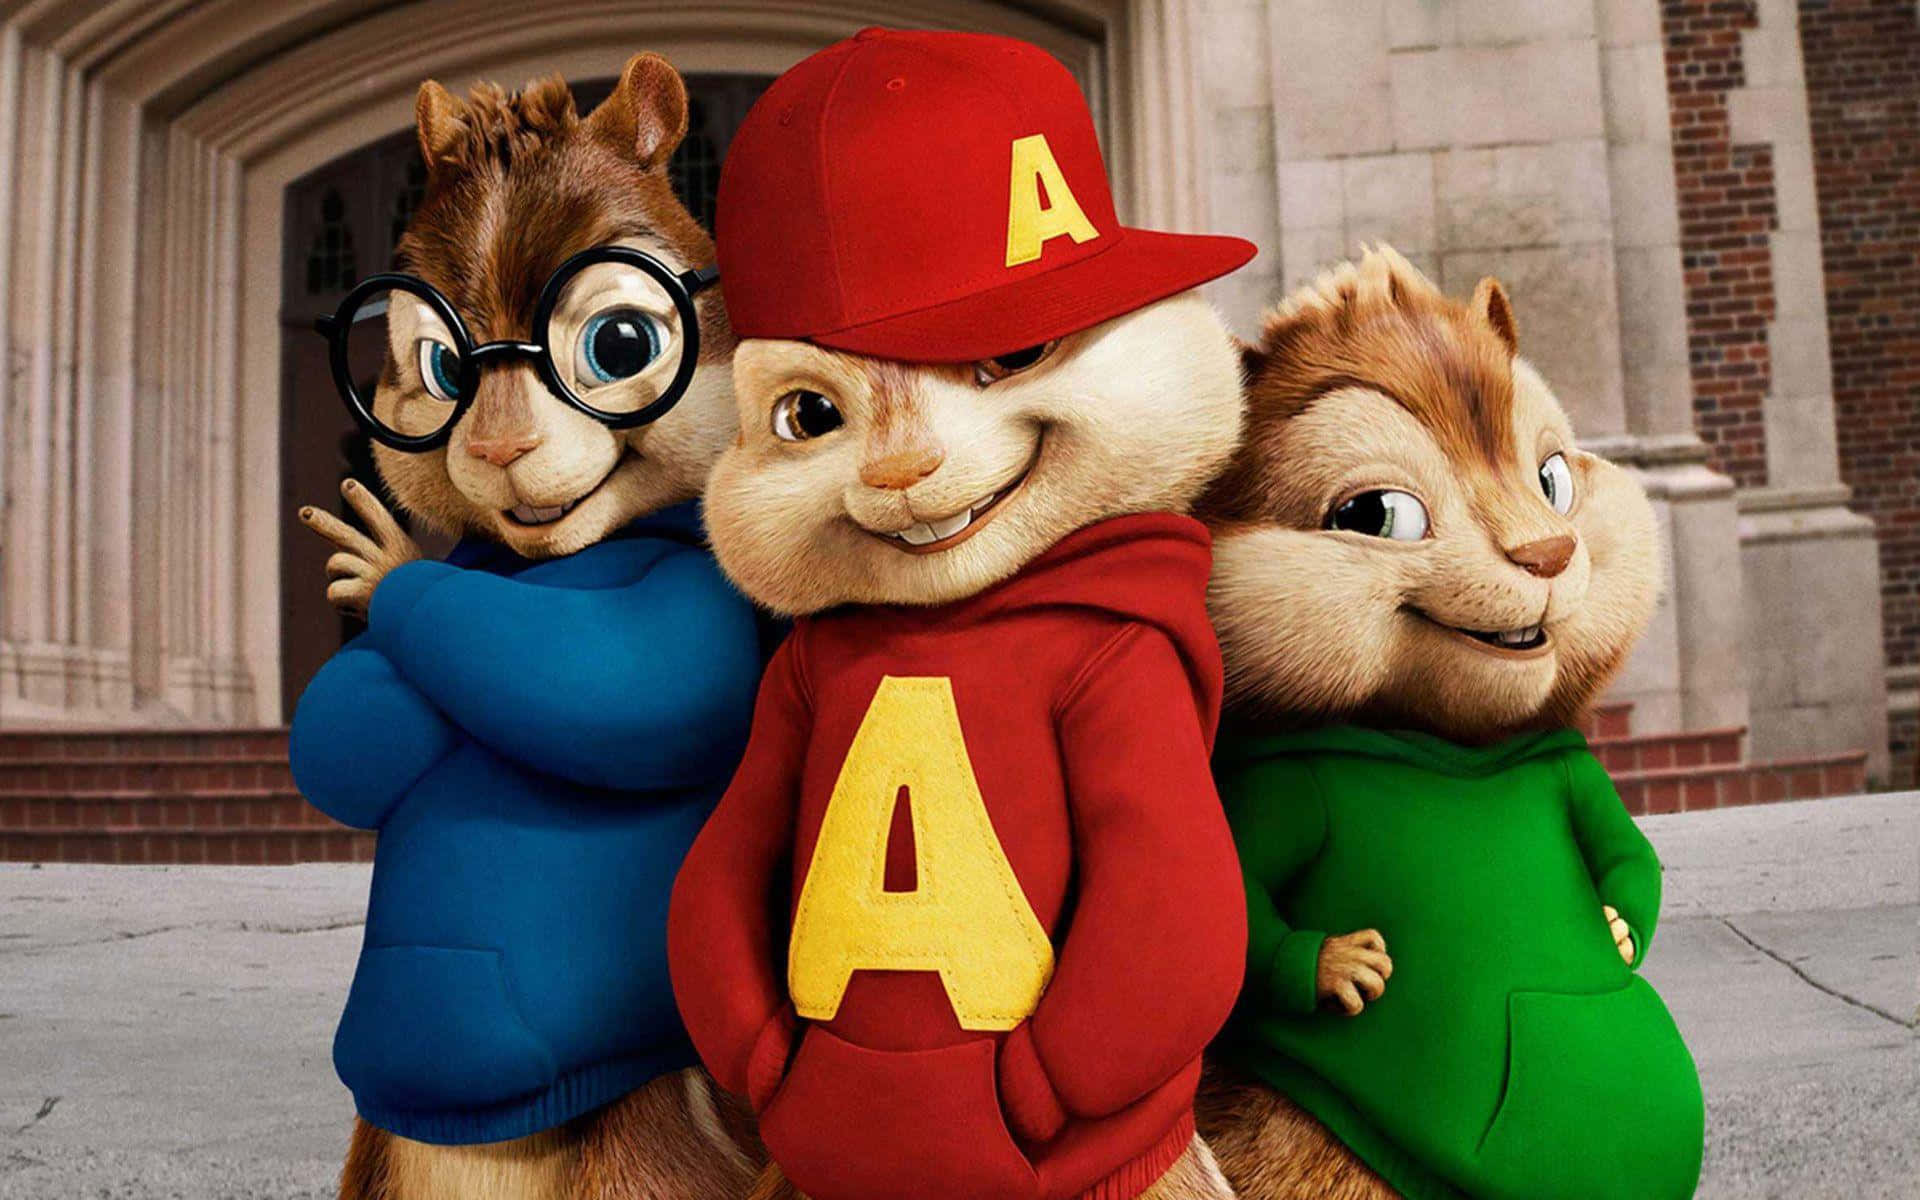 Alvin And The Chipmunks Movie